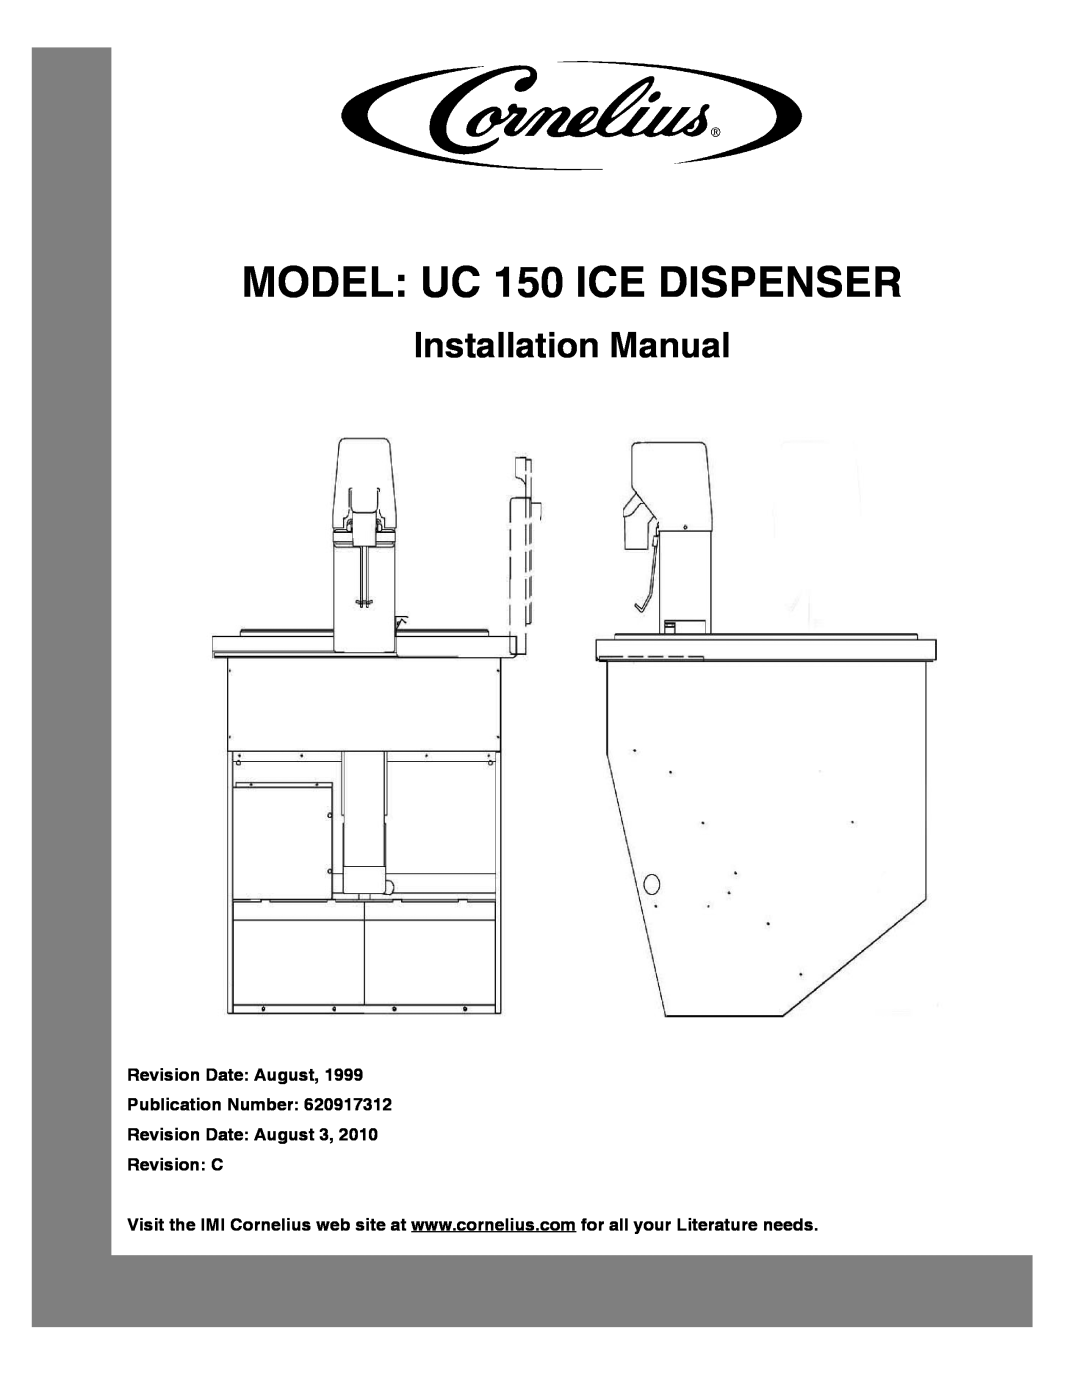 Cornelius installation manual Installation Manual, MODEL UC 150 ICE DISPENSER, Revision Date August, Publication Number 